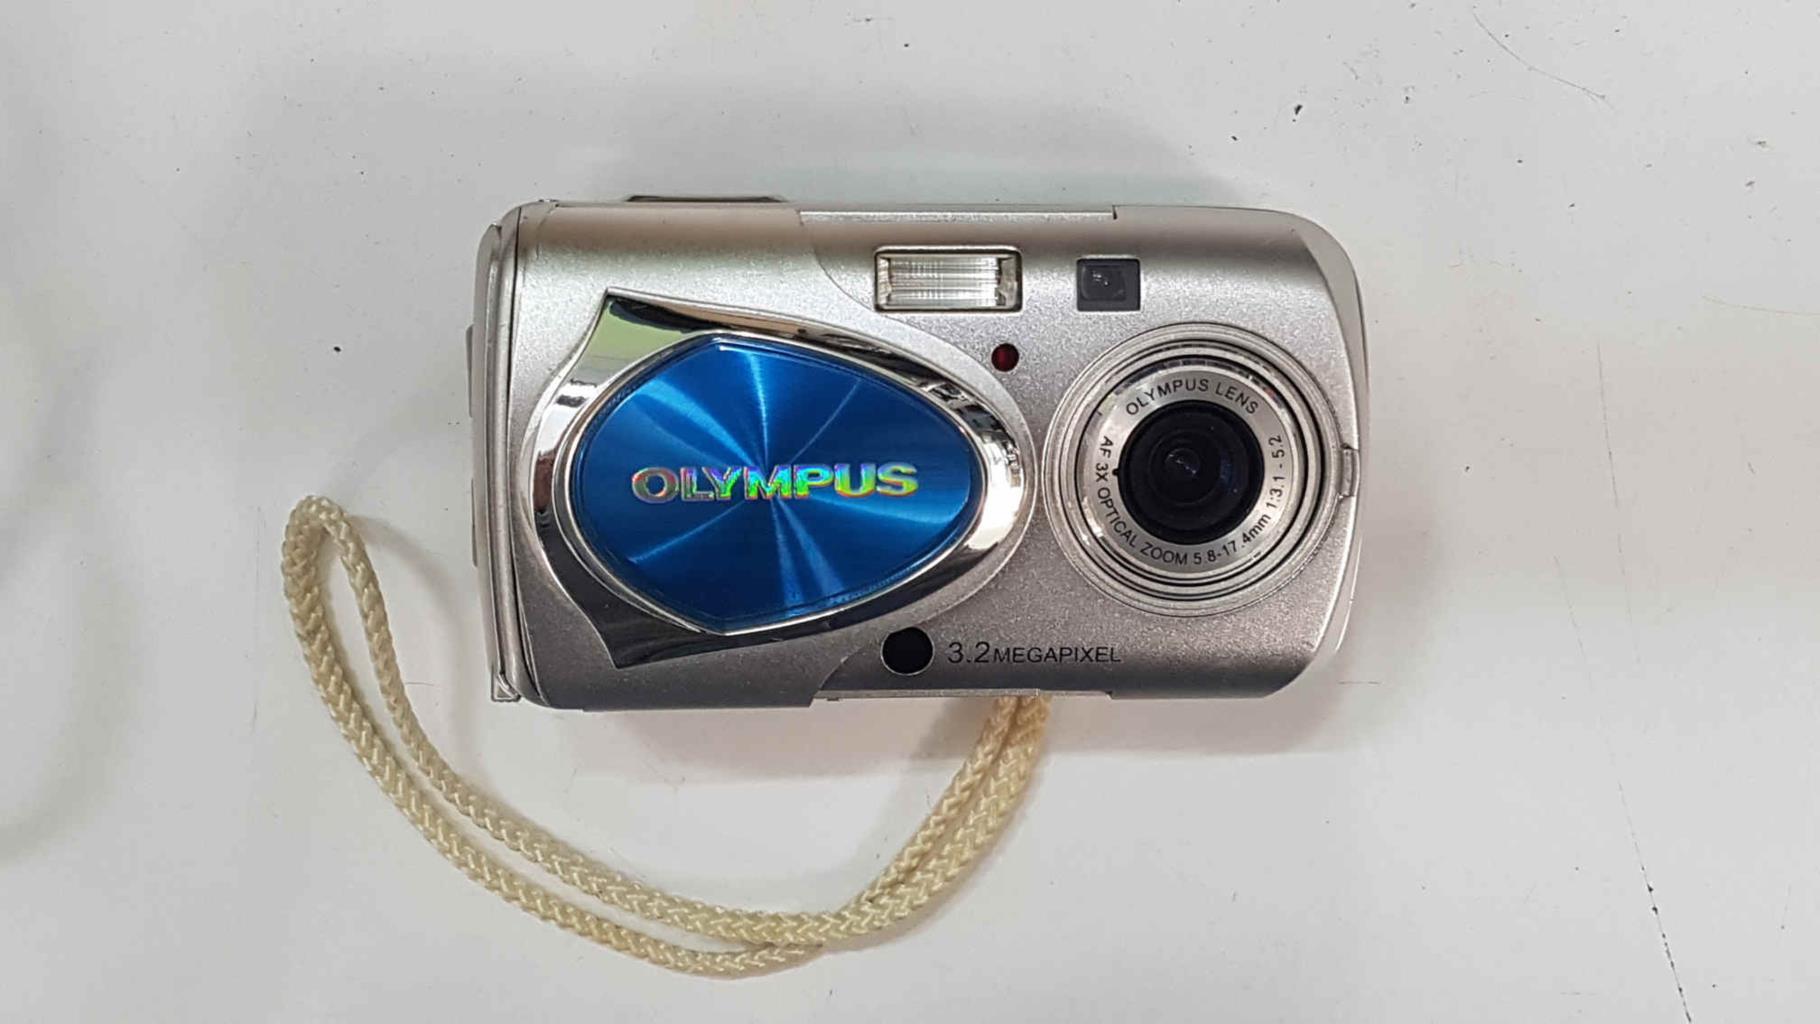 Camara fotográfica digital compacta Olympus MJU-15 Digital. 3.2 Megapixel